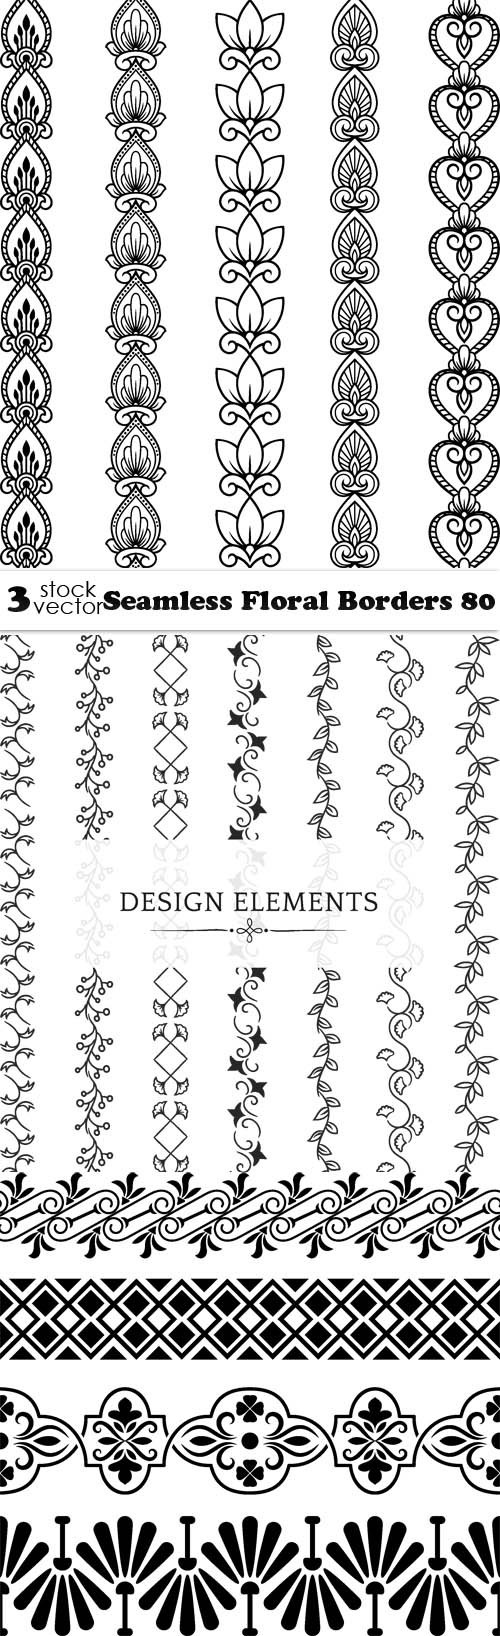 Vectors - Seamless Floral Borders 80